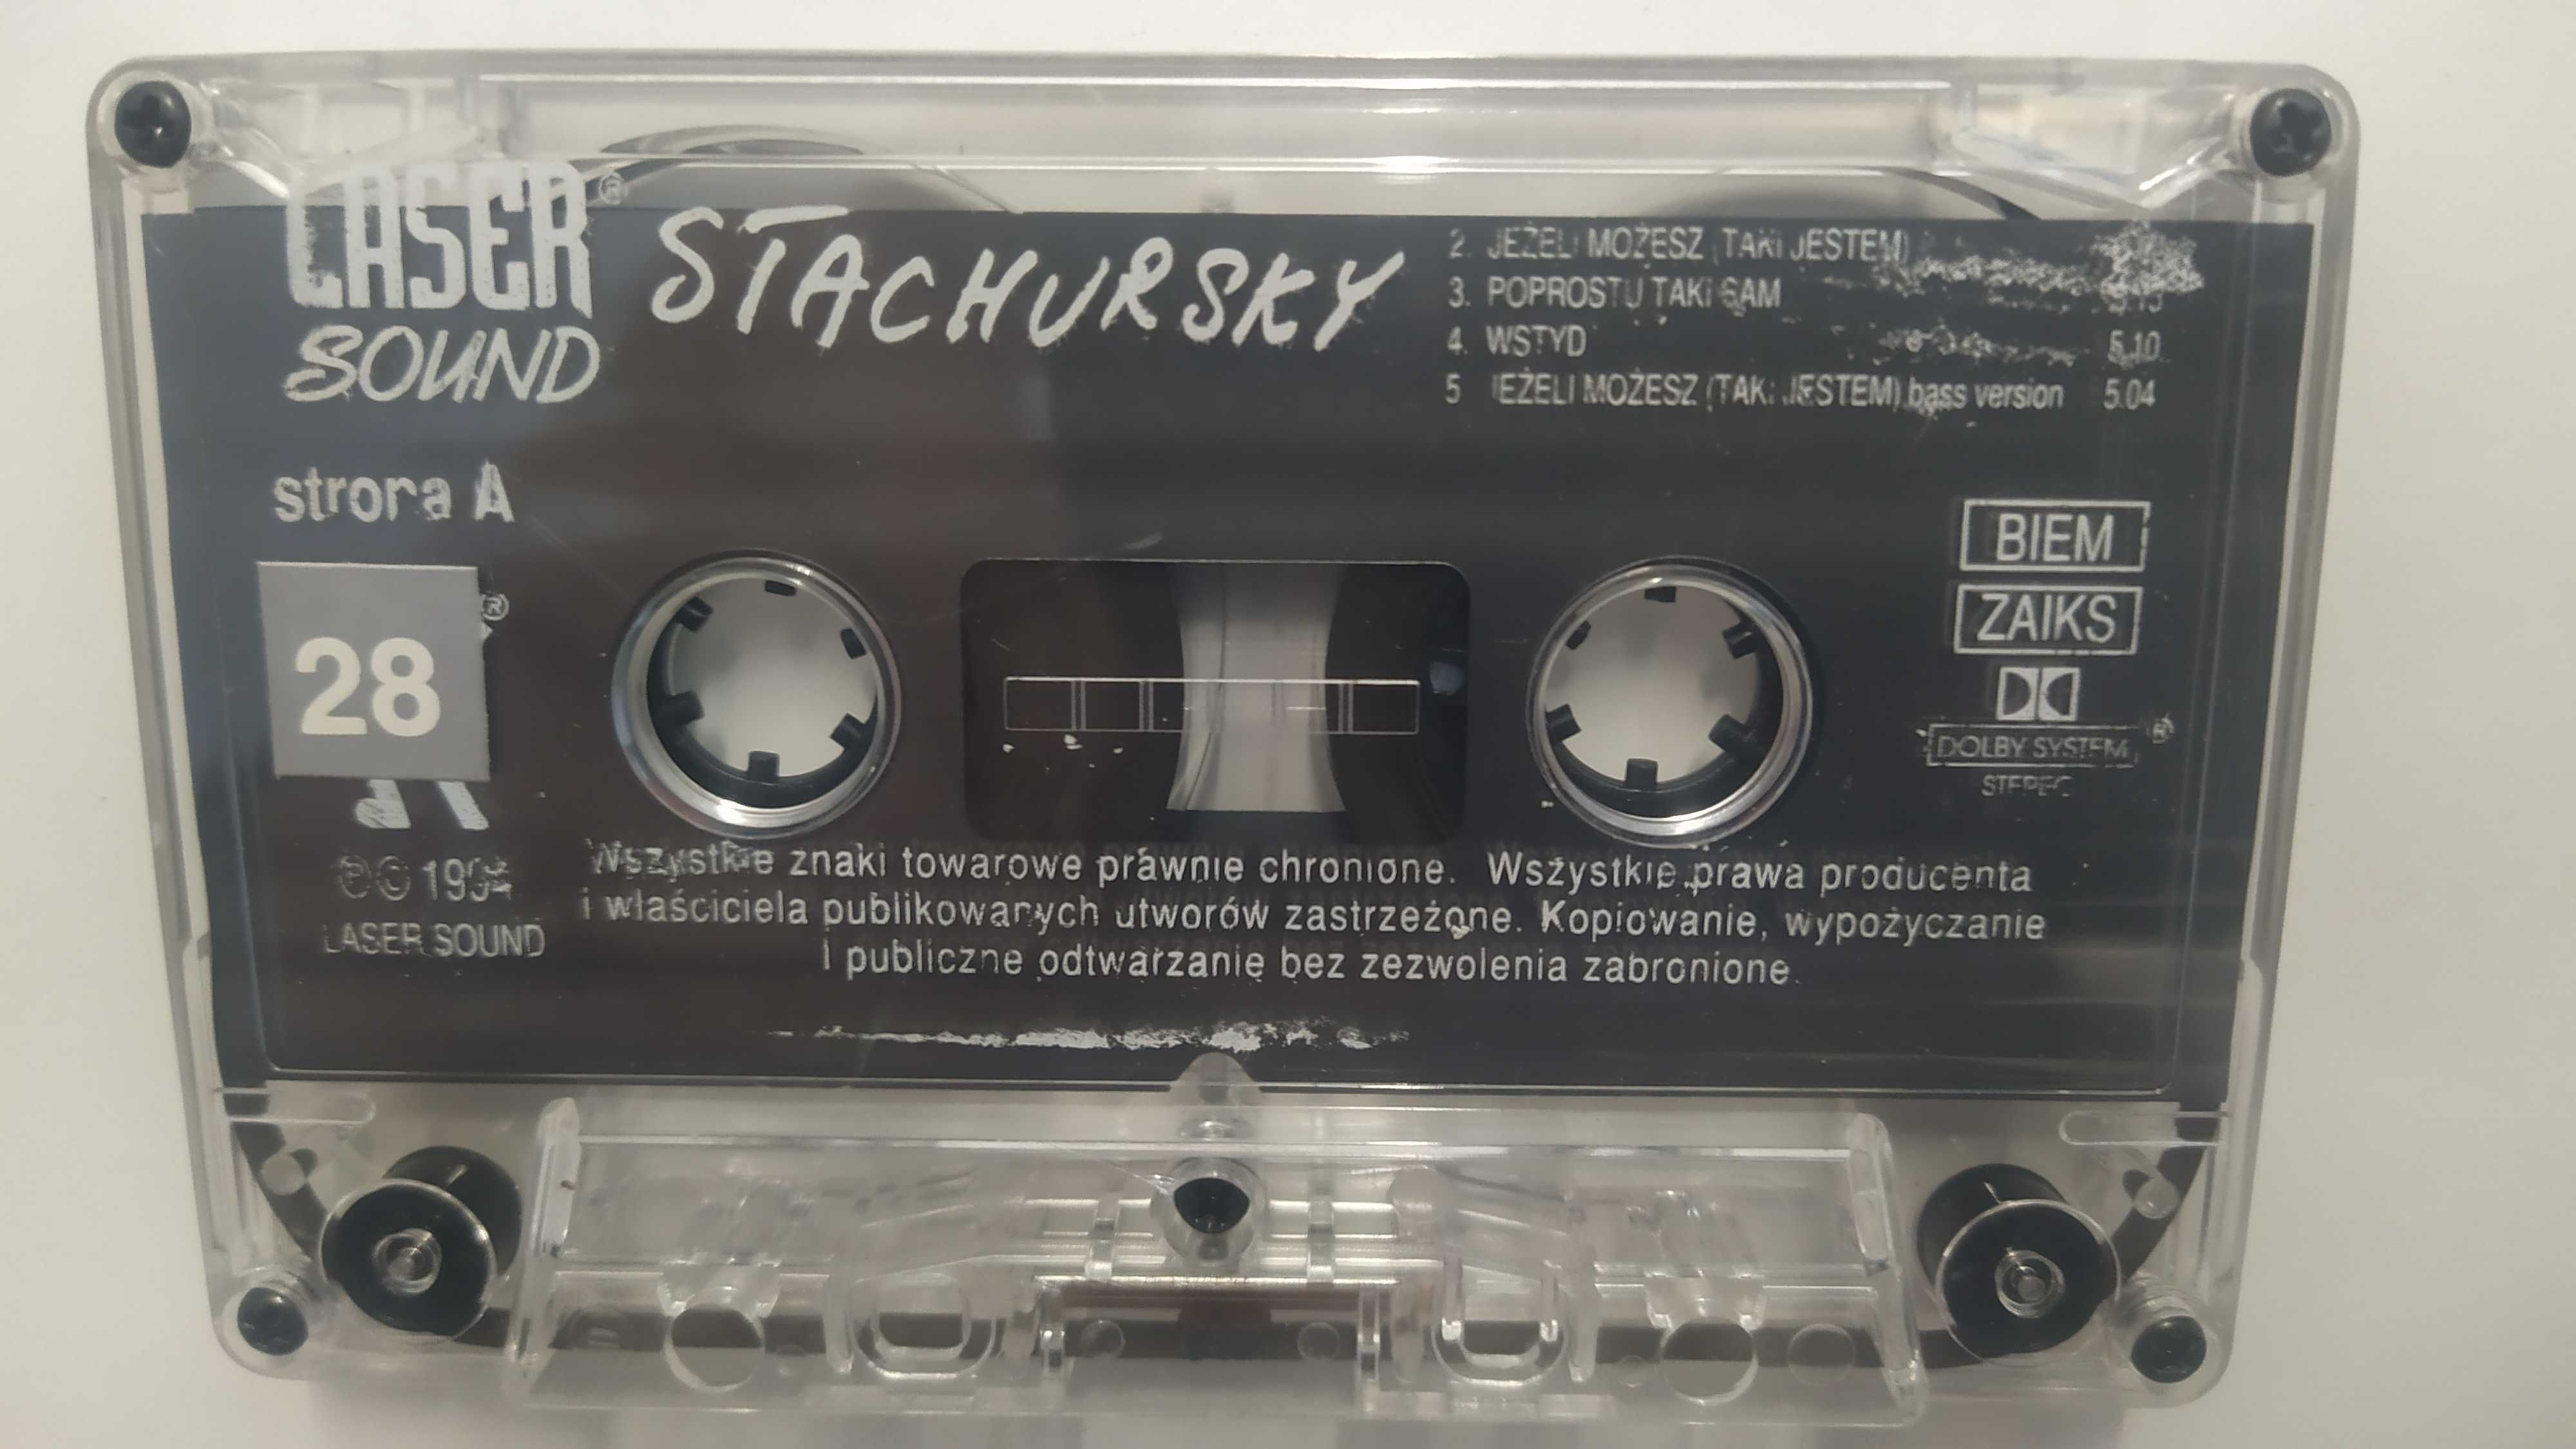 Stachursky Taki Jestem kaseta MC disco polo